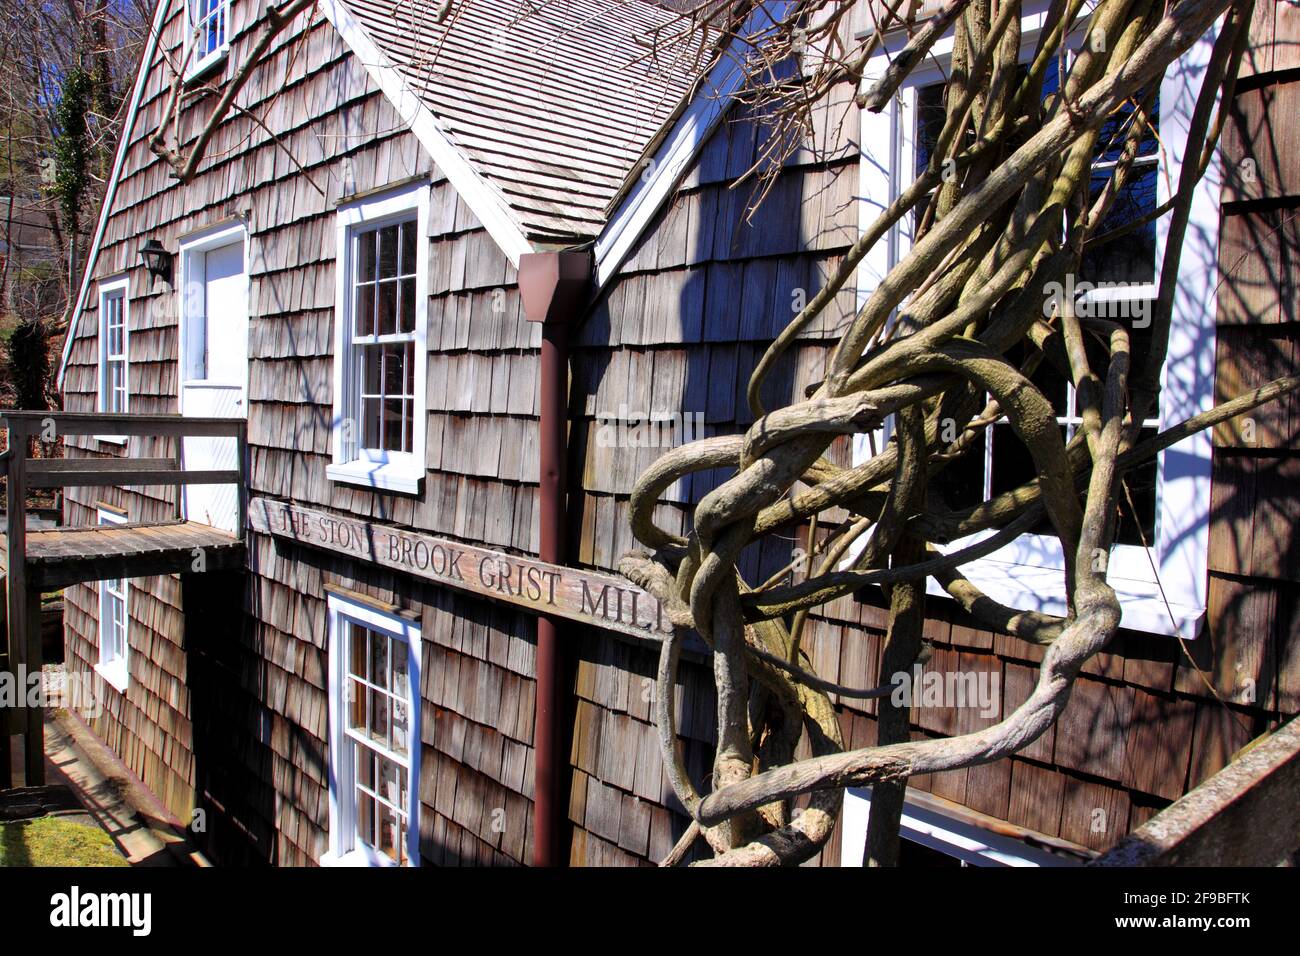 Stony Brook Grist Mill Long Island New York Stock Photo